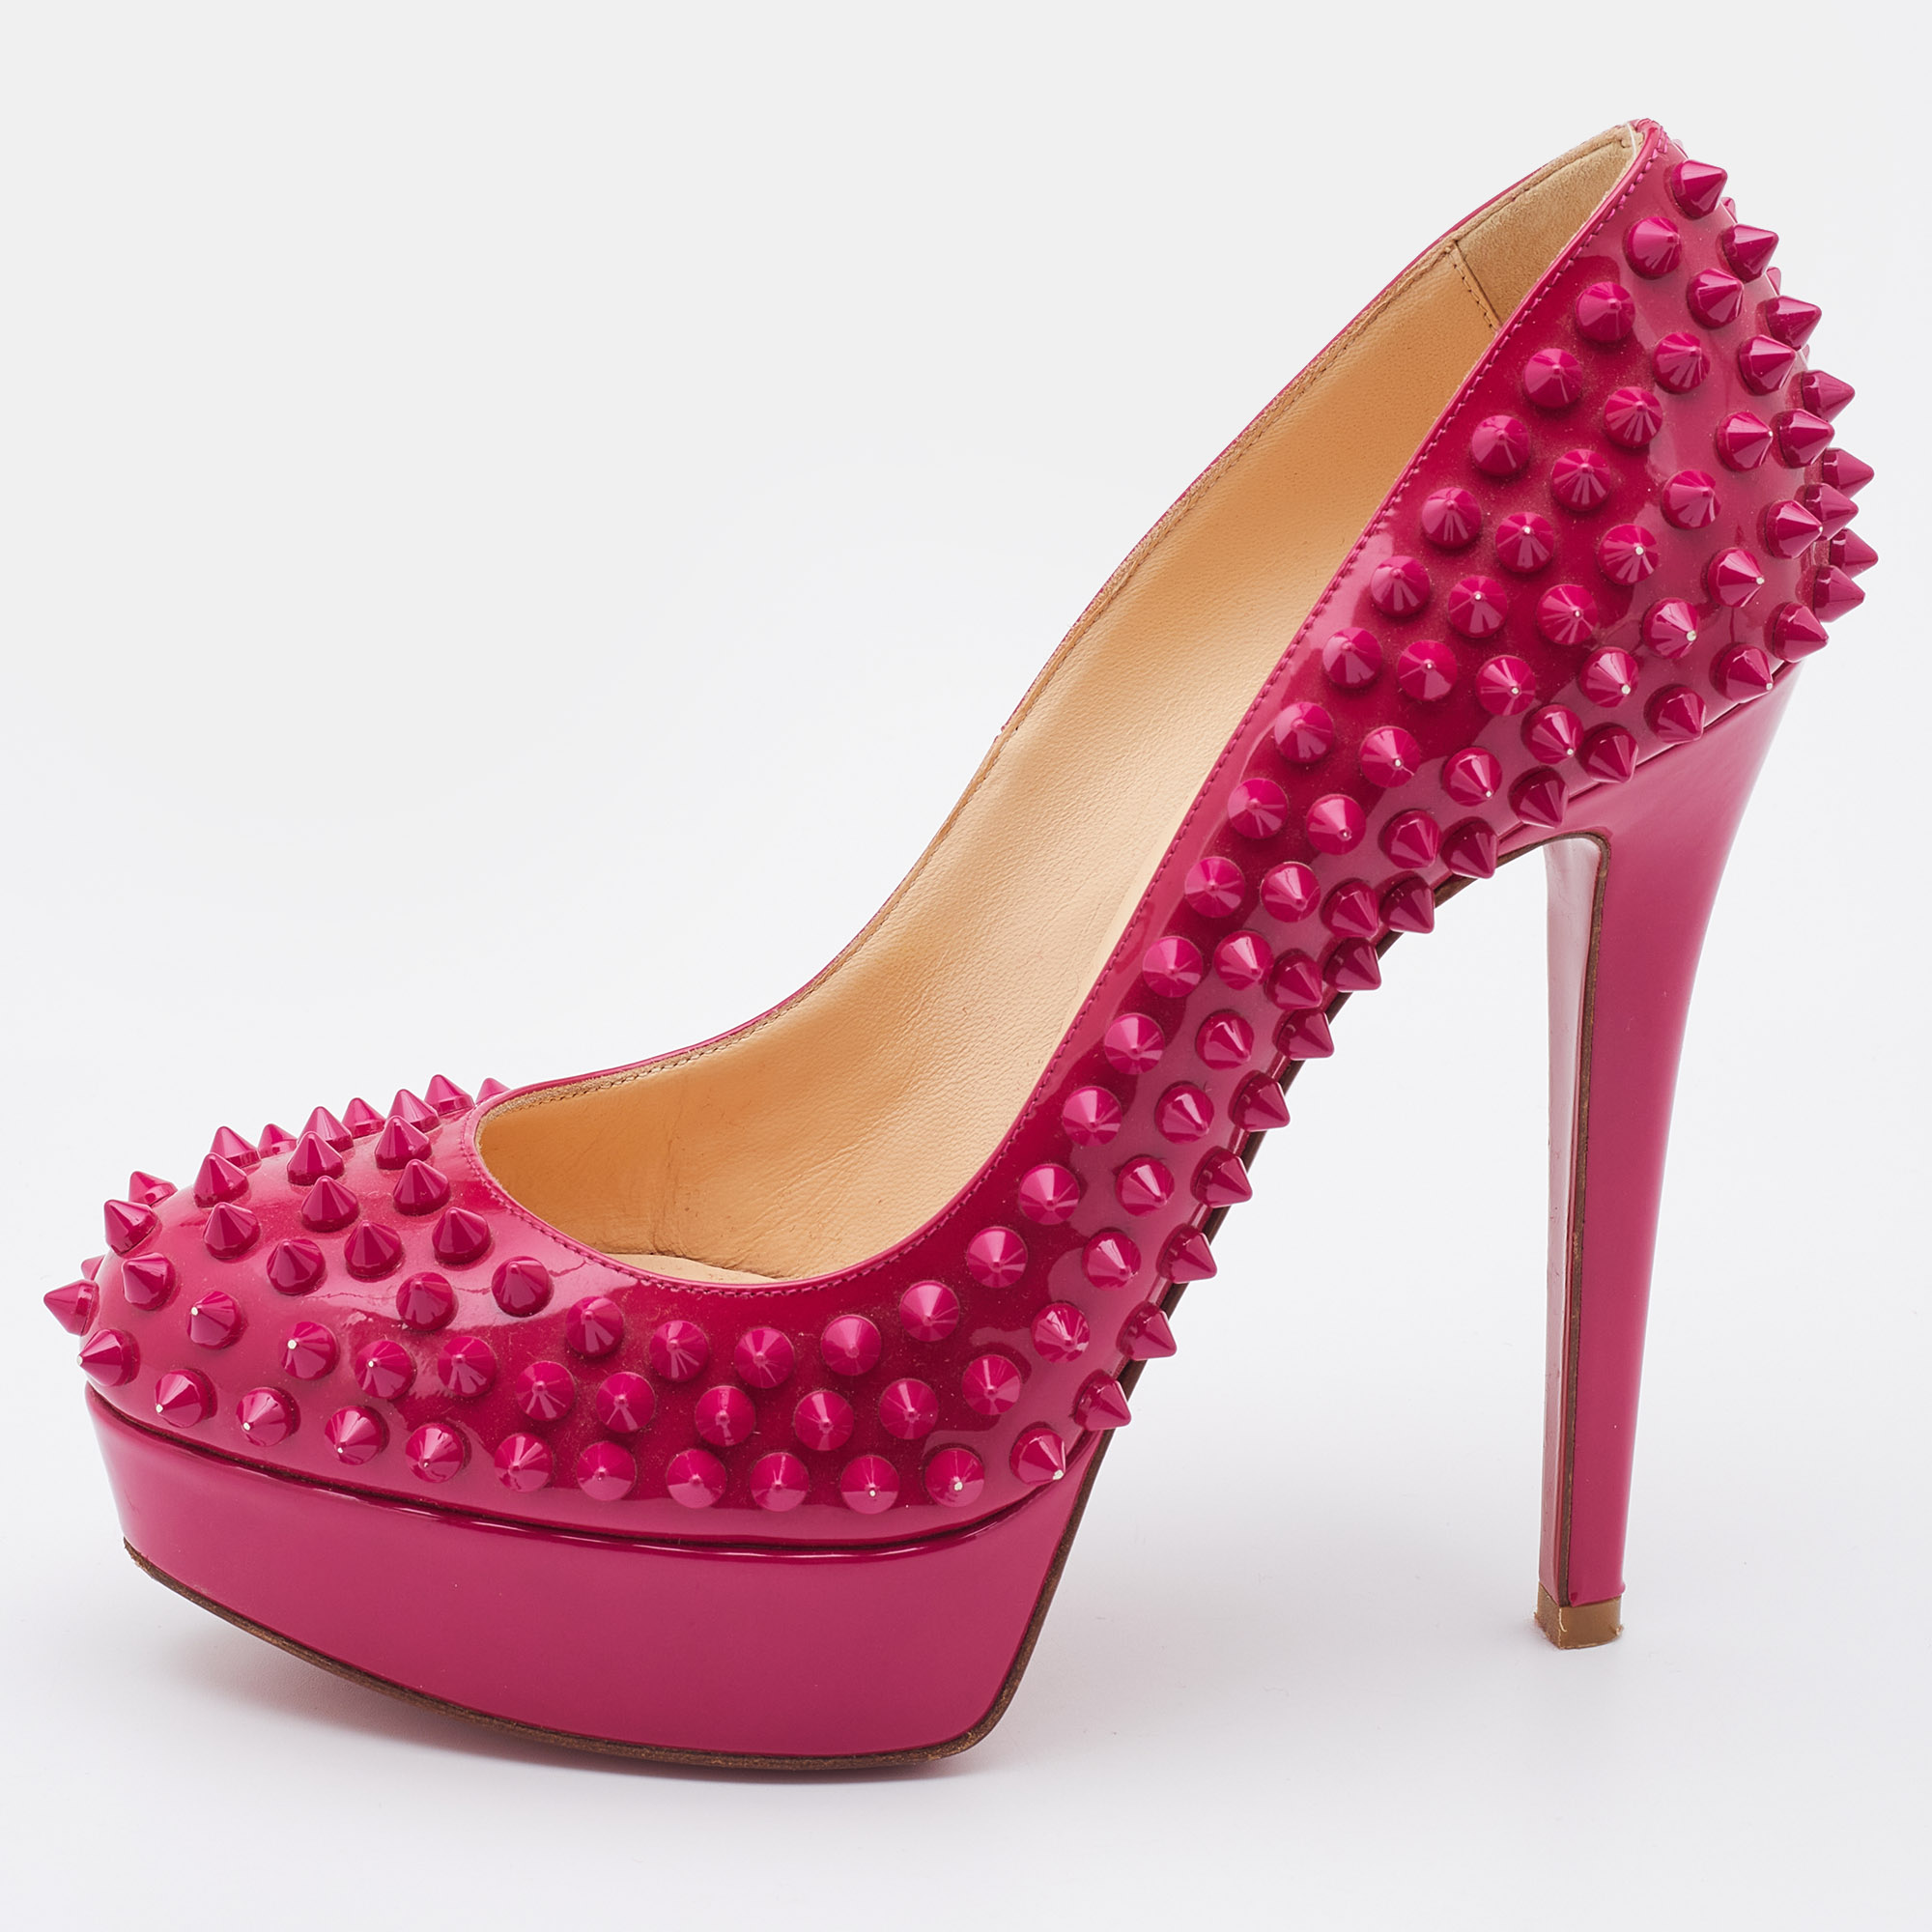 Christian louboutin pink patent leather alti spike platform pumps size 36